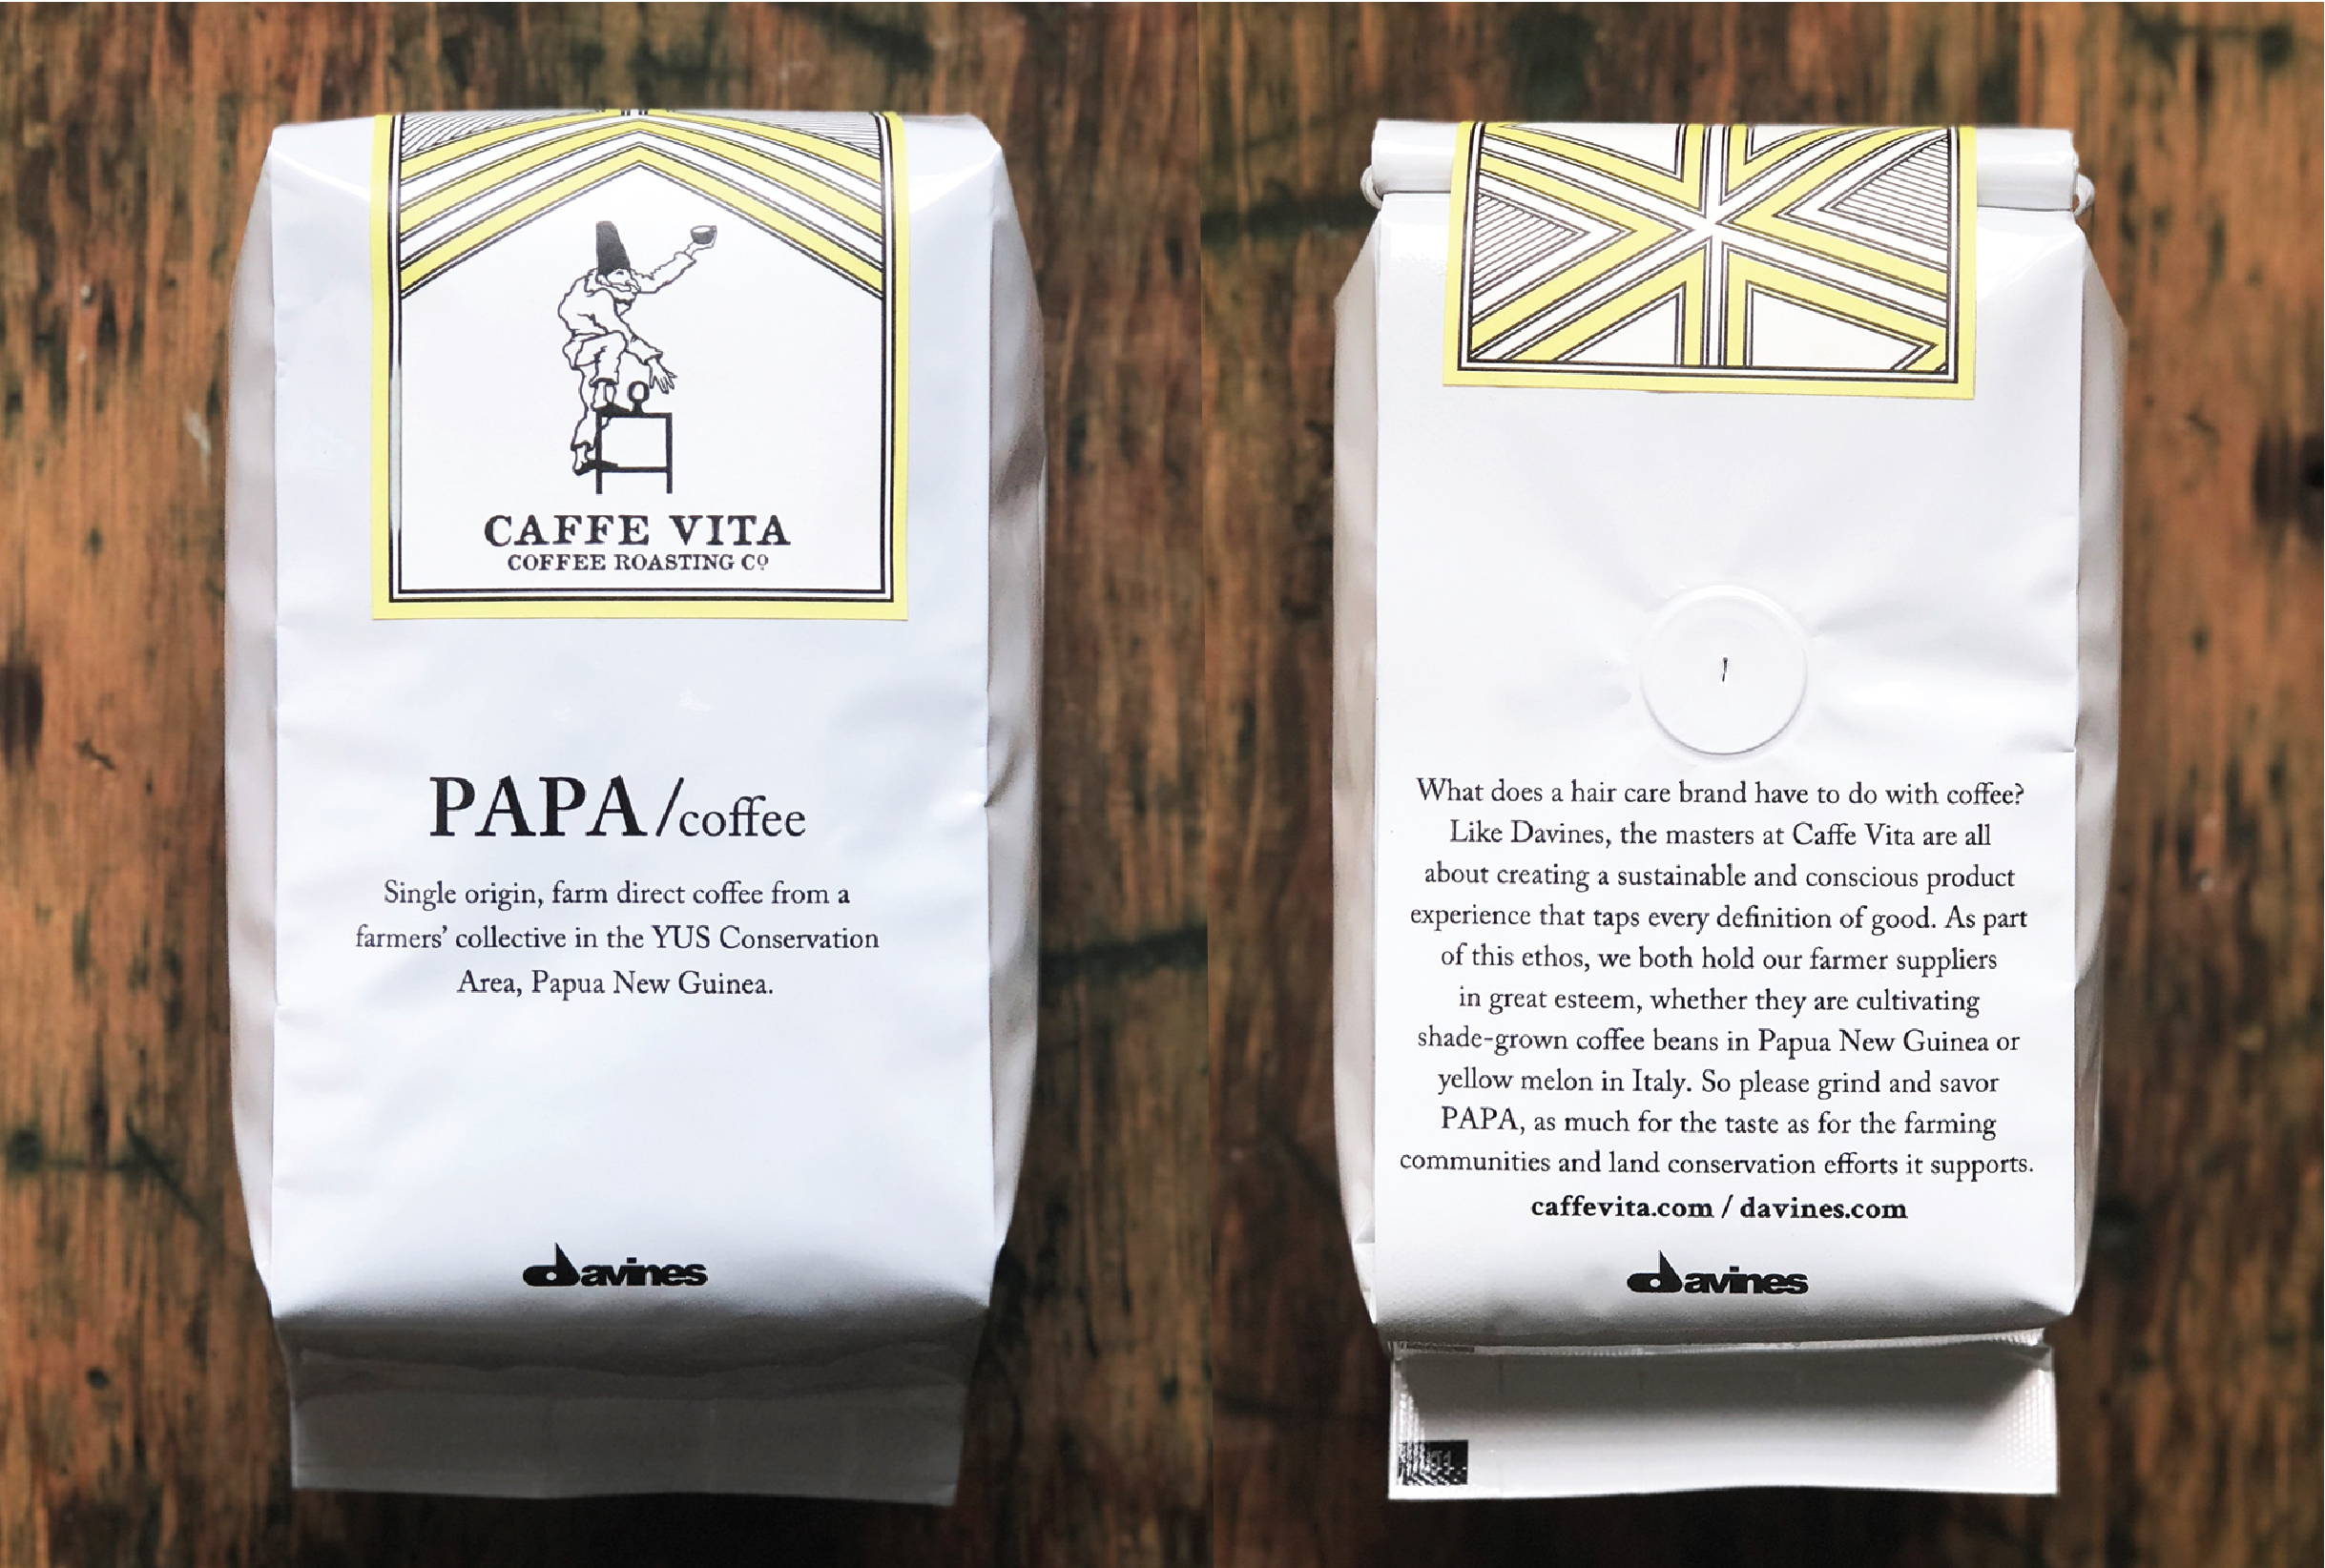 Davines and Caffe Vita PAPA Coffee